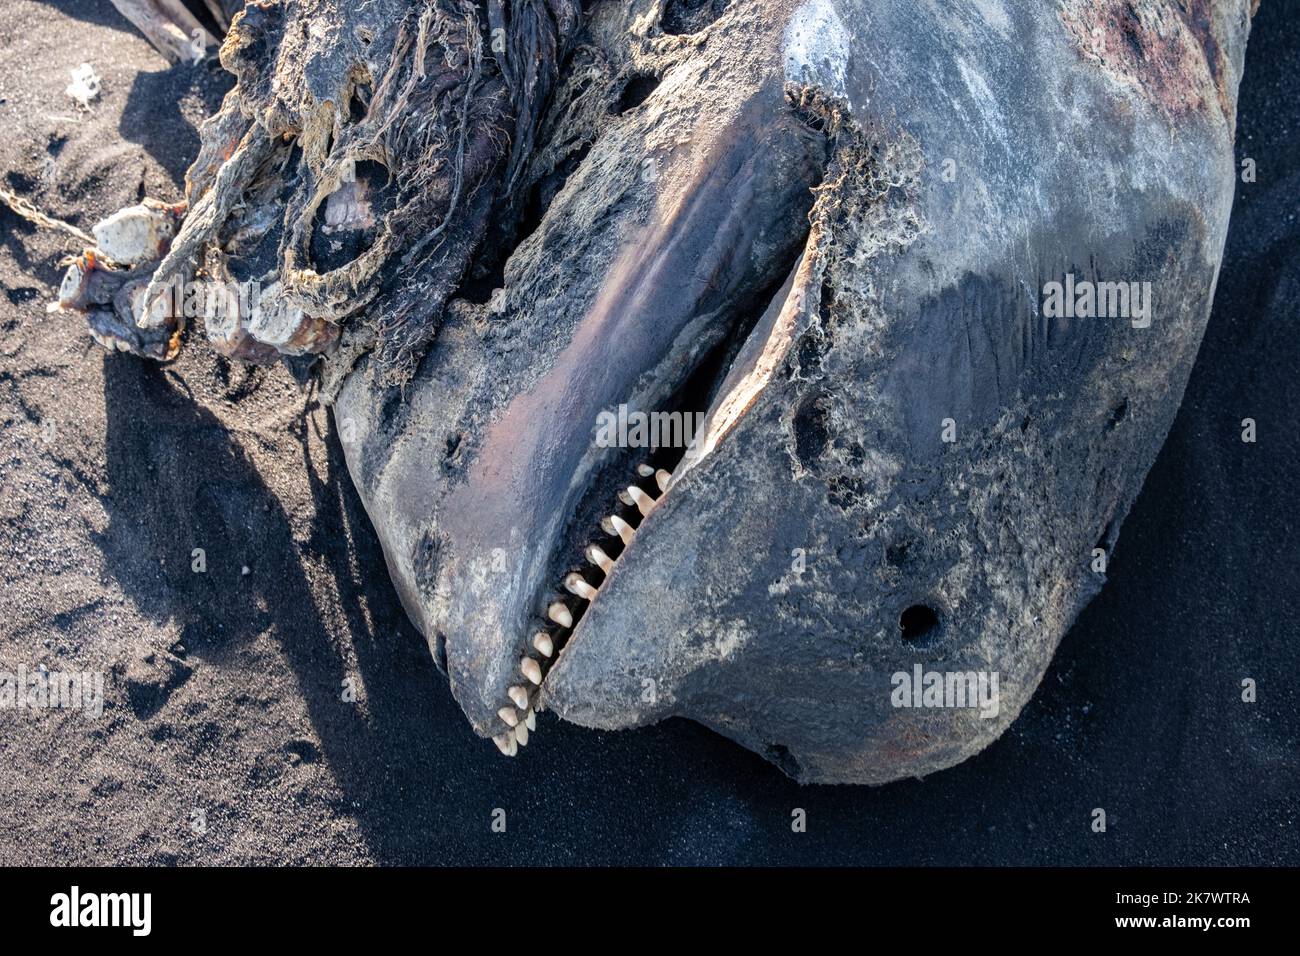 A decomposing whale carcass, presumably a beluga or a small orca - verwesender Walkadaver, vermutlich ein Beluga oder kleiner Orca Stock Photo